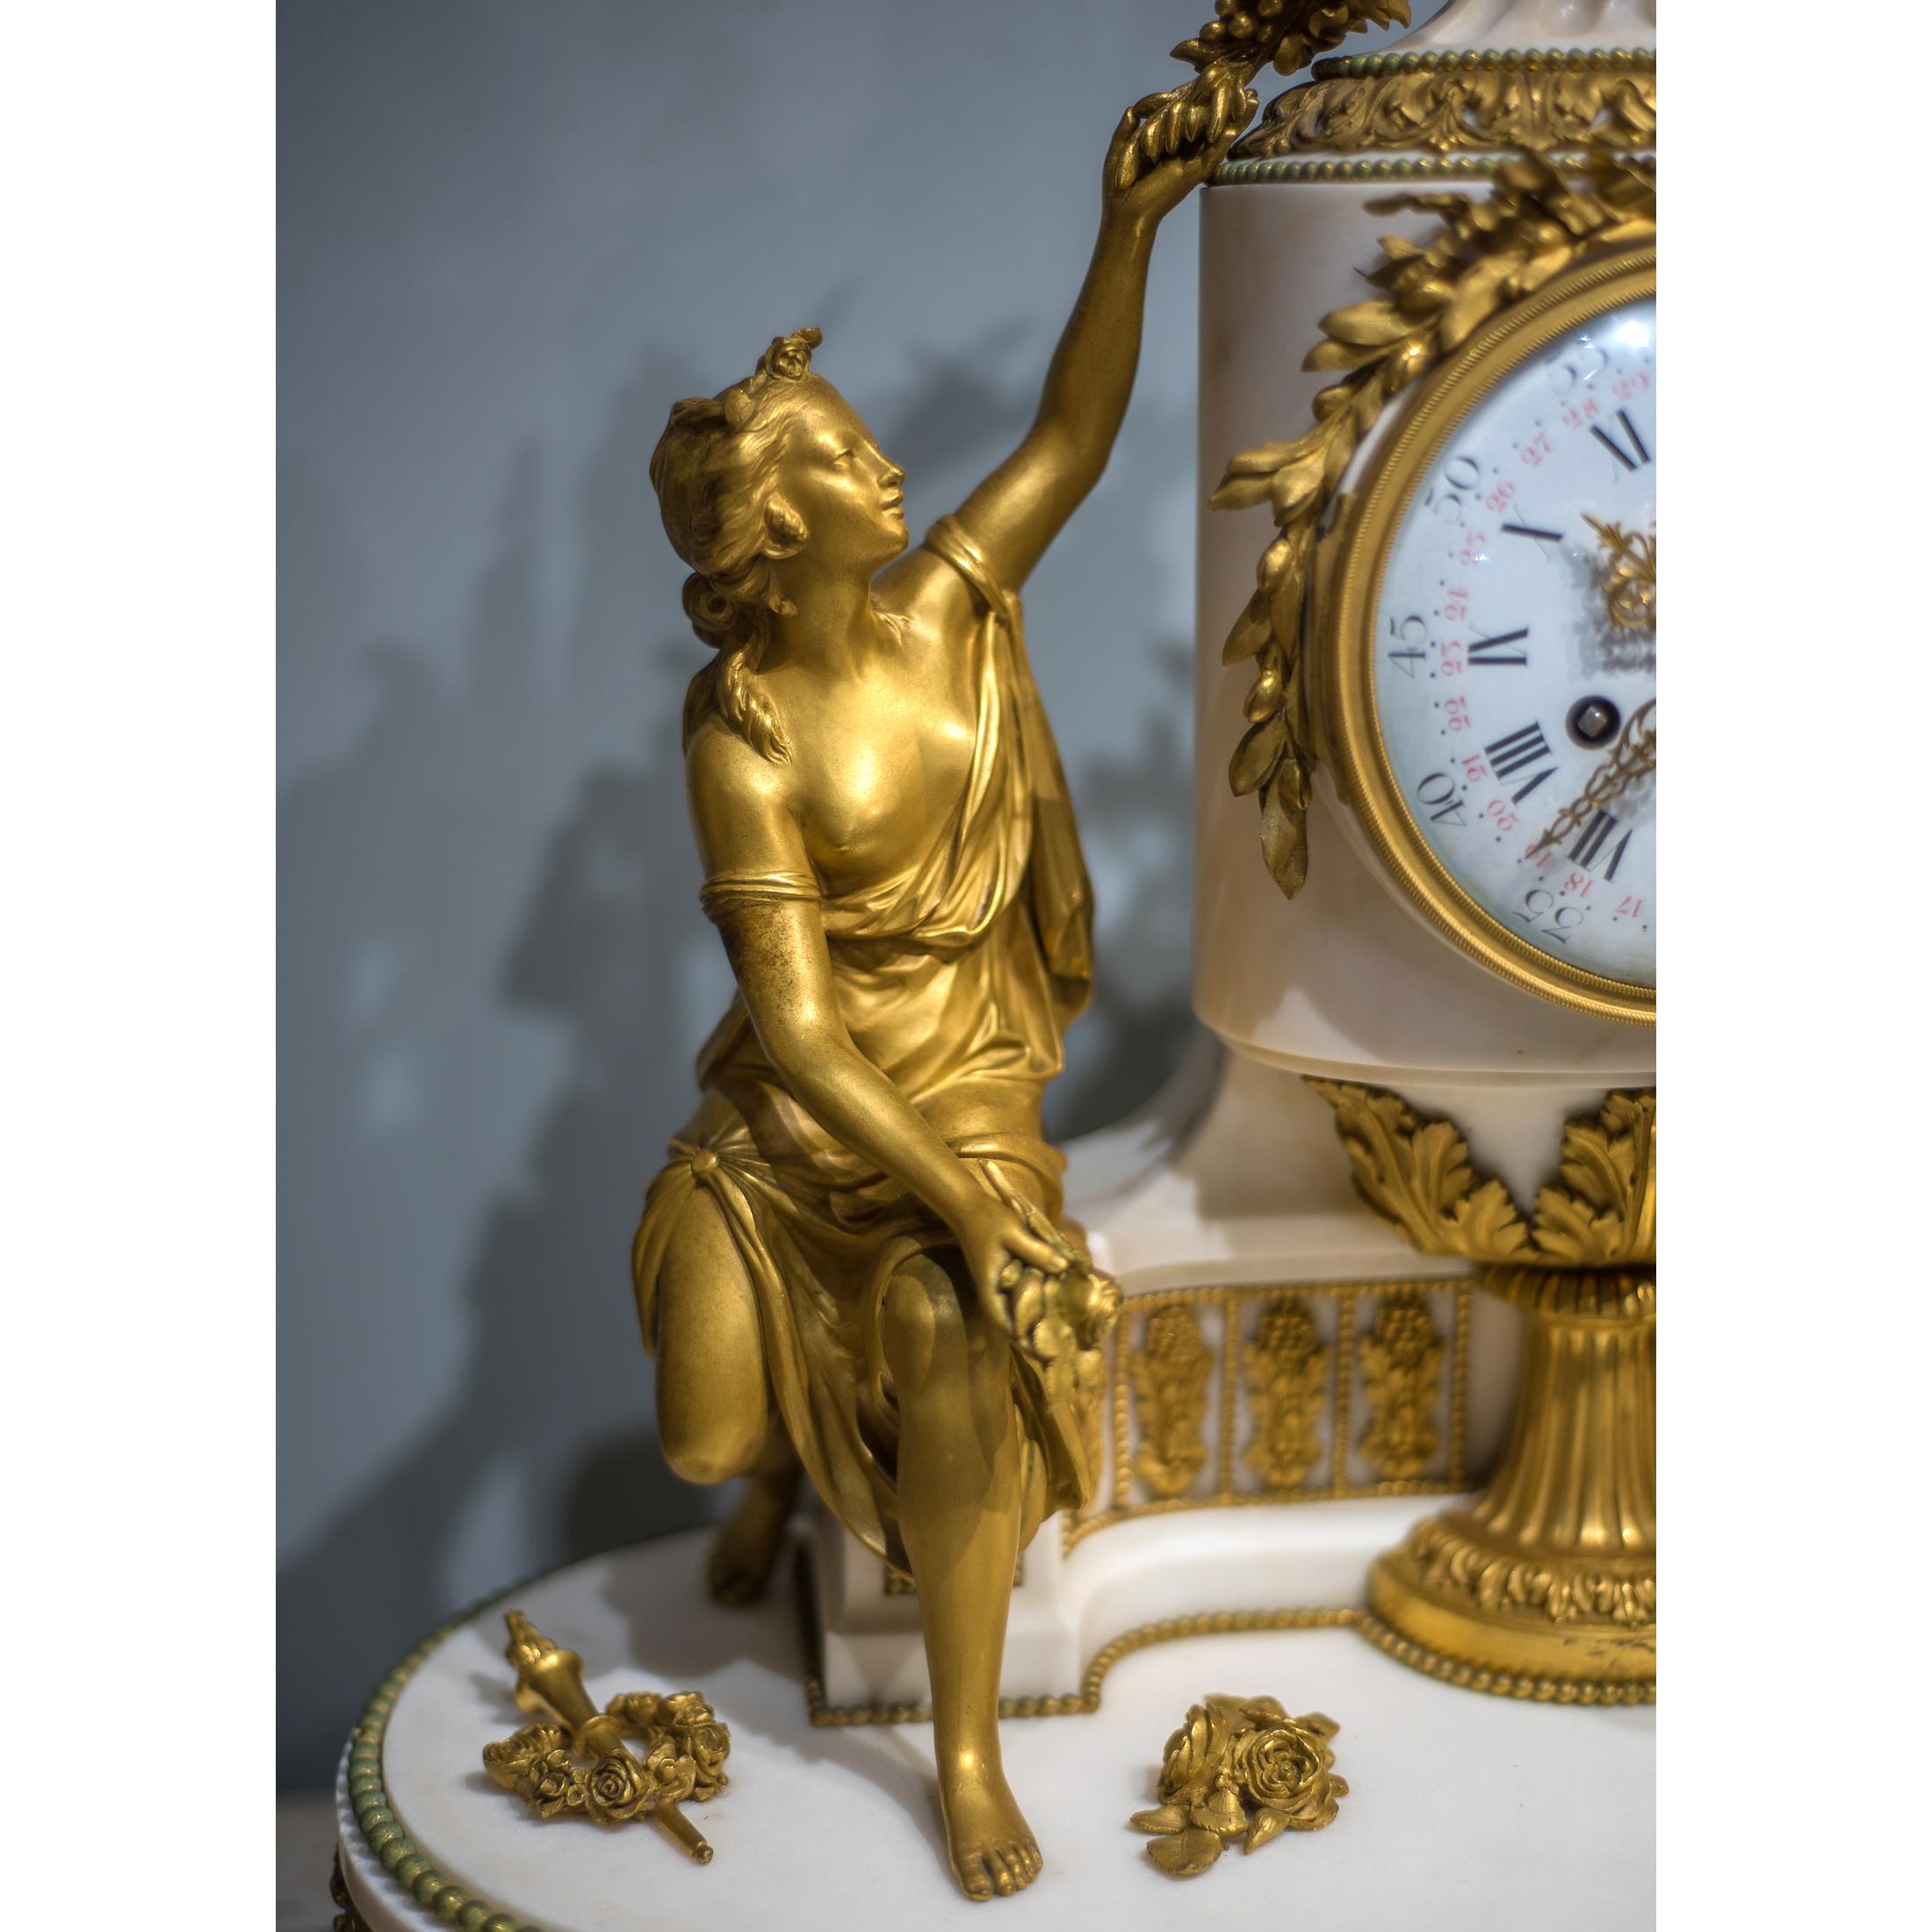 19th Century Louis XVI Style Gilt Bronze and White Marble Mantel Clock with Enamel Dial